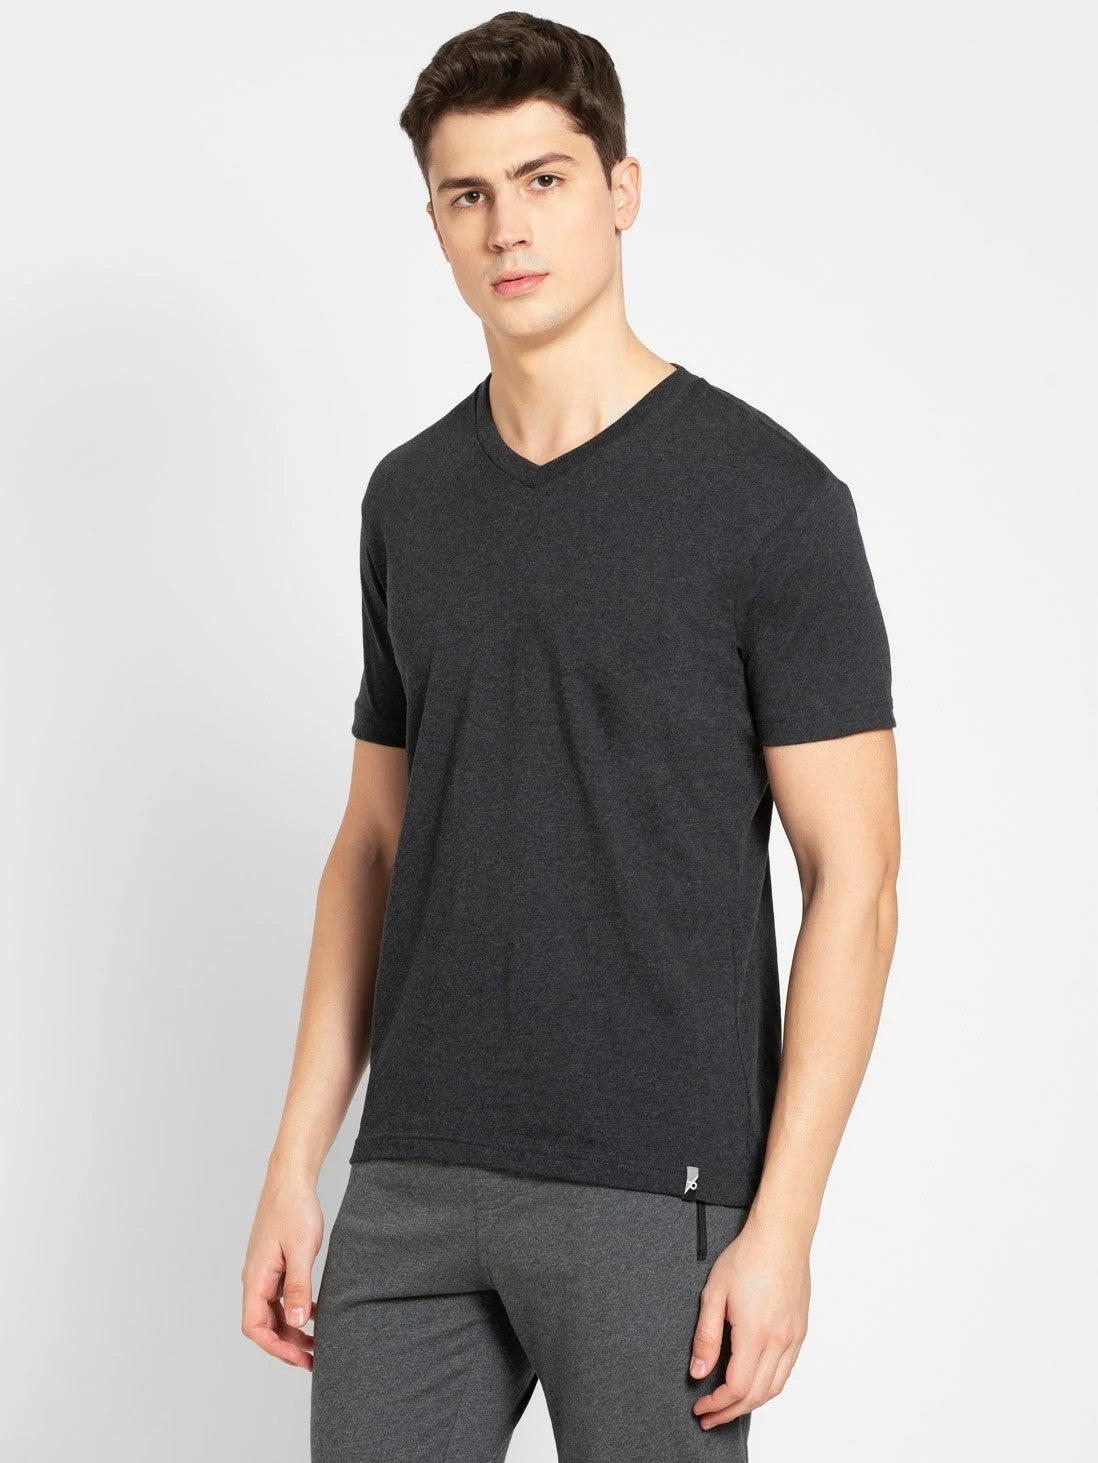 Men's Black Melange V-Neck T-shirt